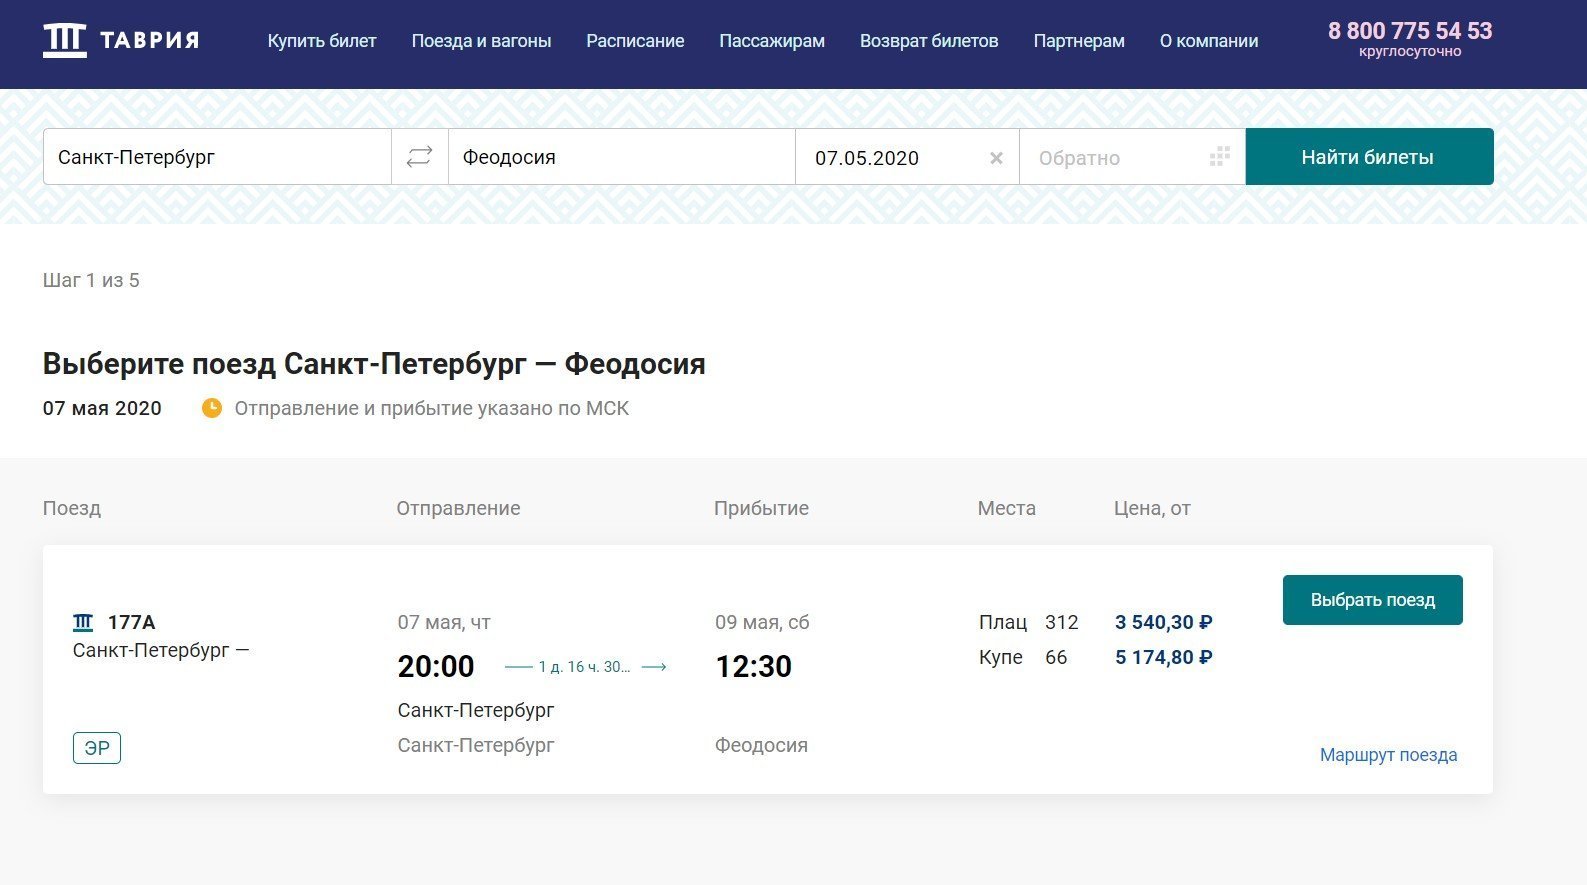 Продажа билетов на поезд Санкт-Петербург - Феодосия